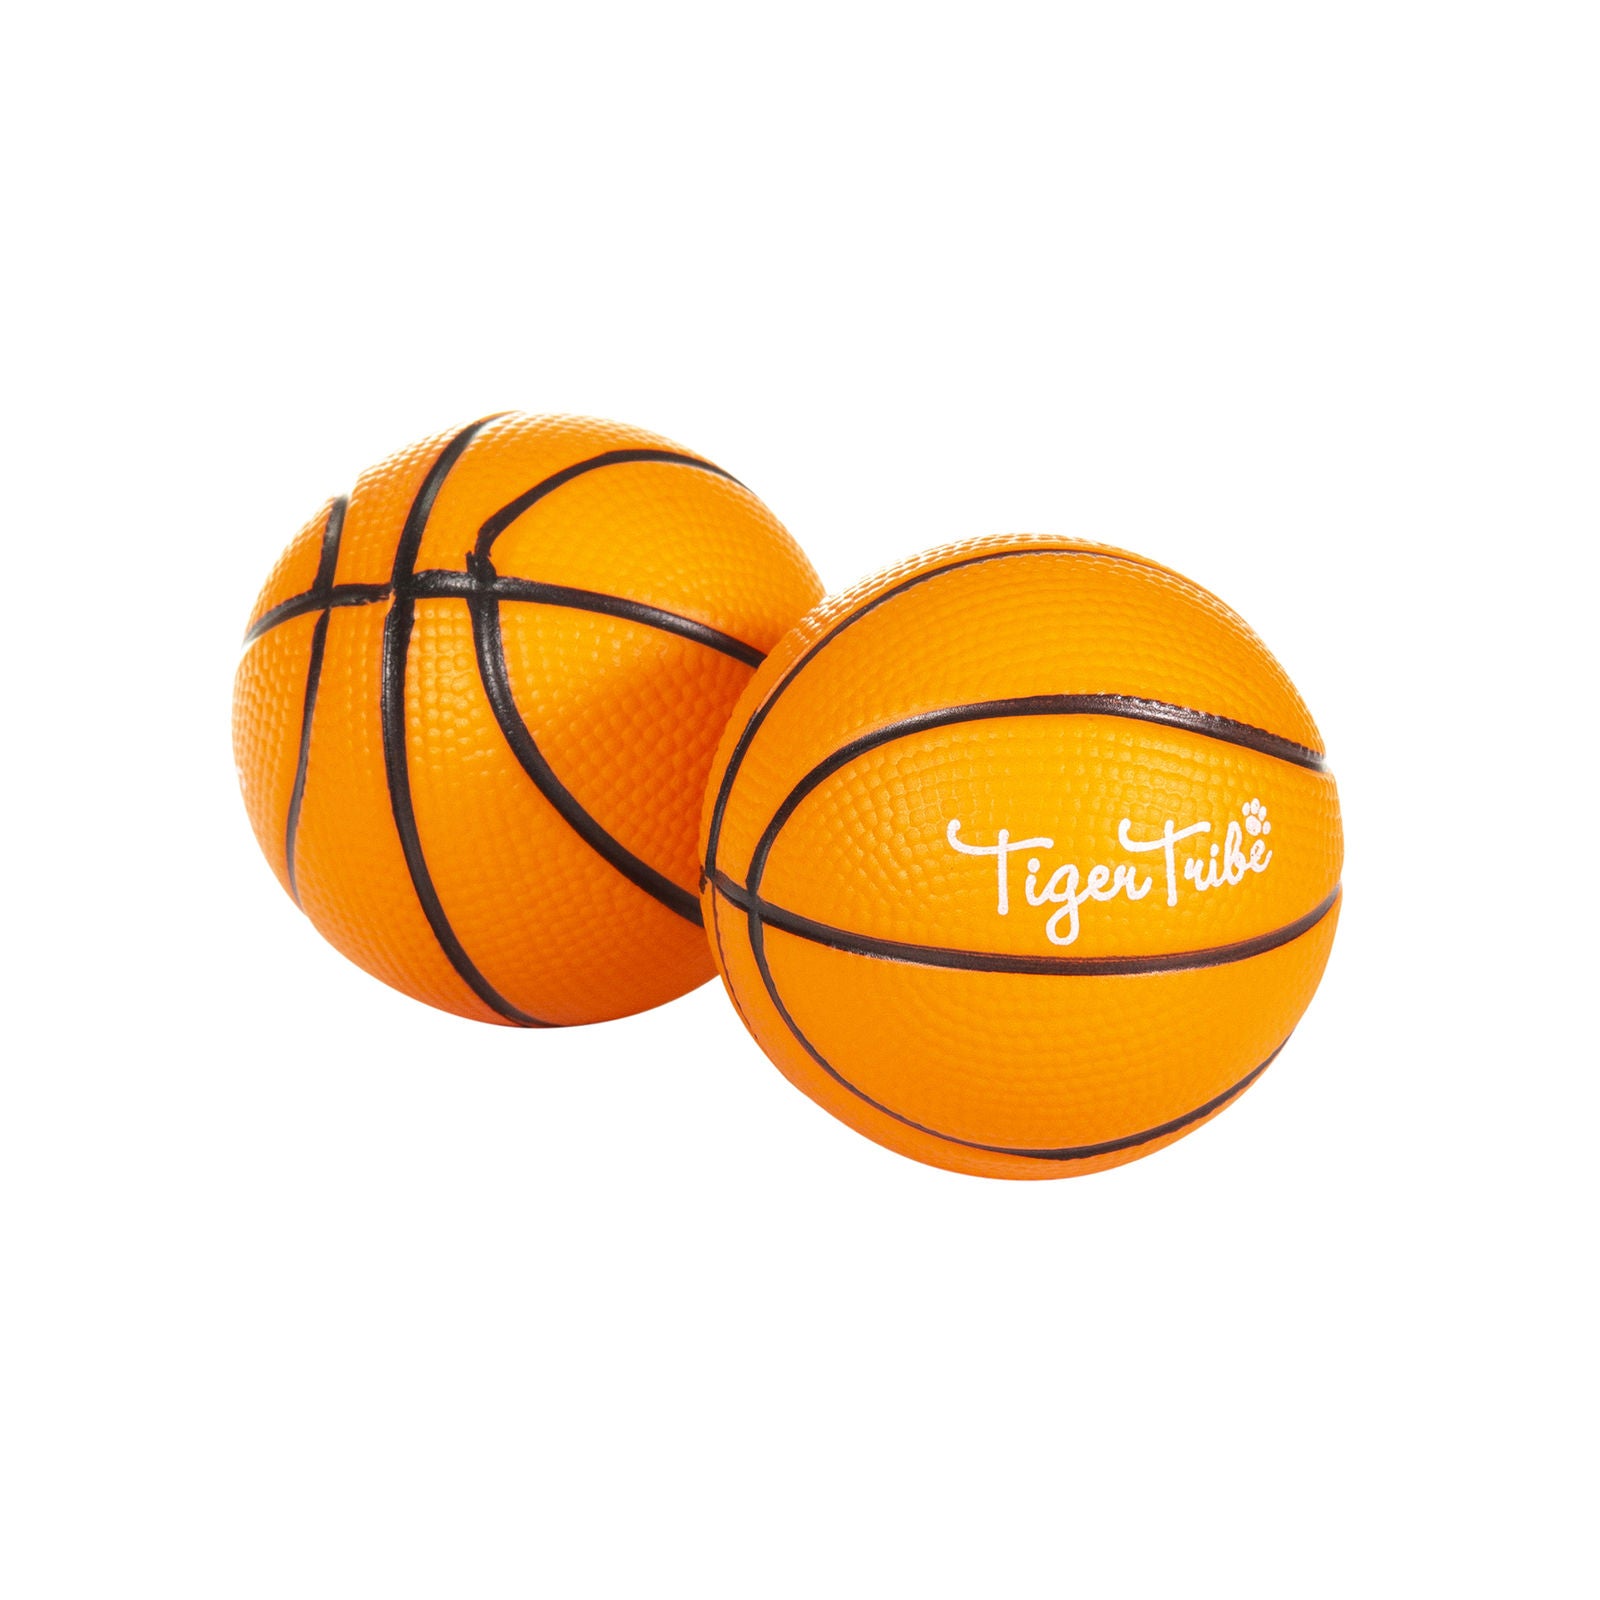 Tiger Tribe Bath Ball basketballs